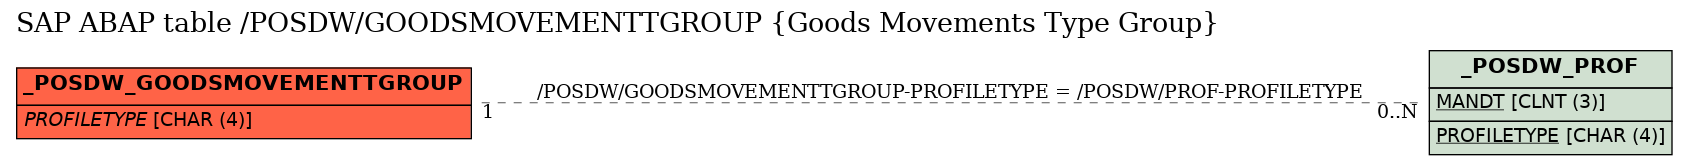 E-R Diagram for table /POSDW/GOODSMOVEMENTTGROUP (Goods Movements Type Group)